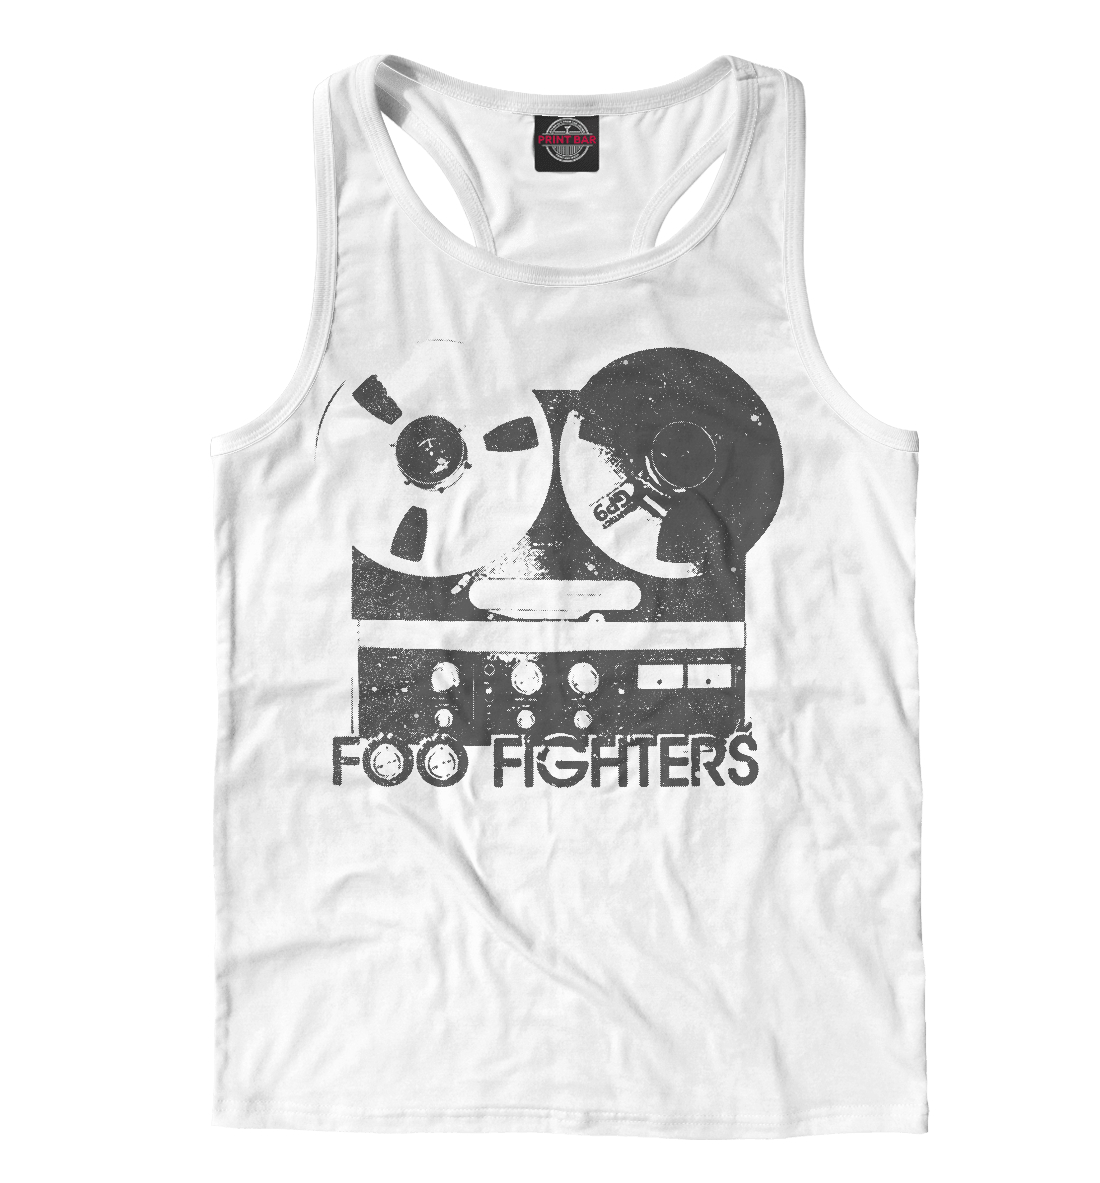 Борцовка Foo Fighters MZK-785784-mayb-2